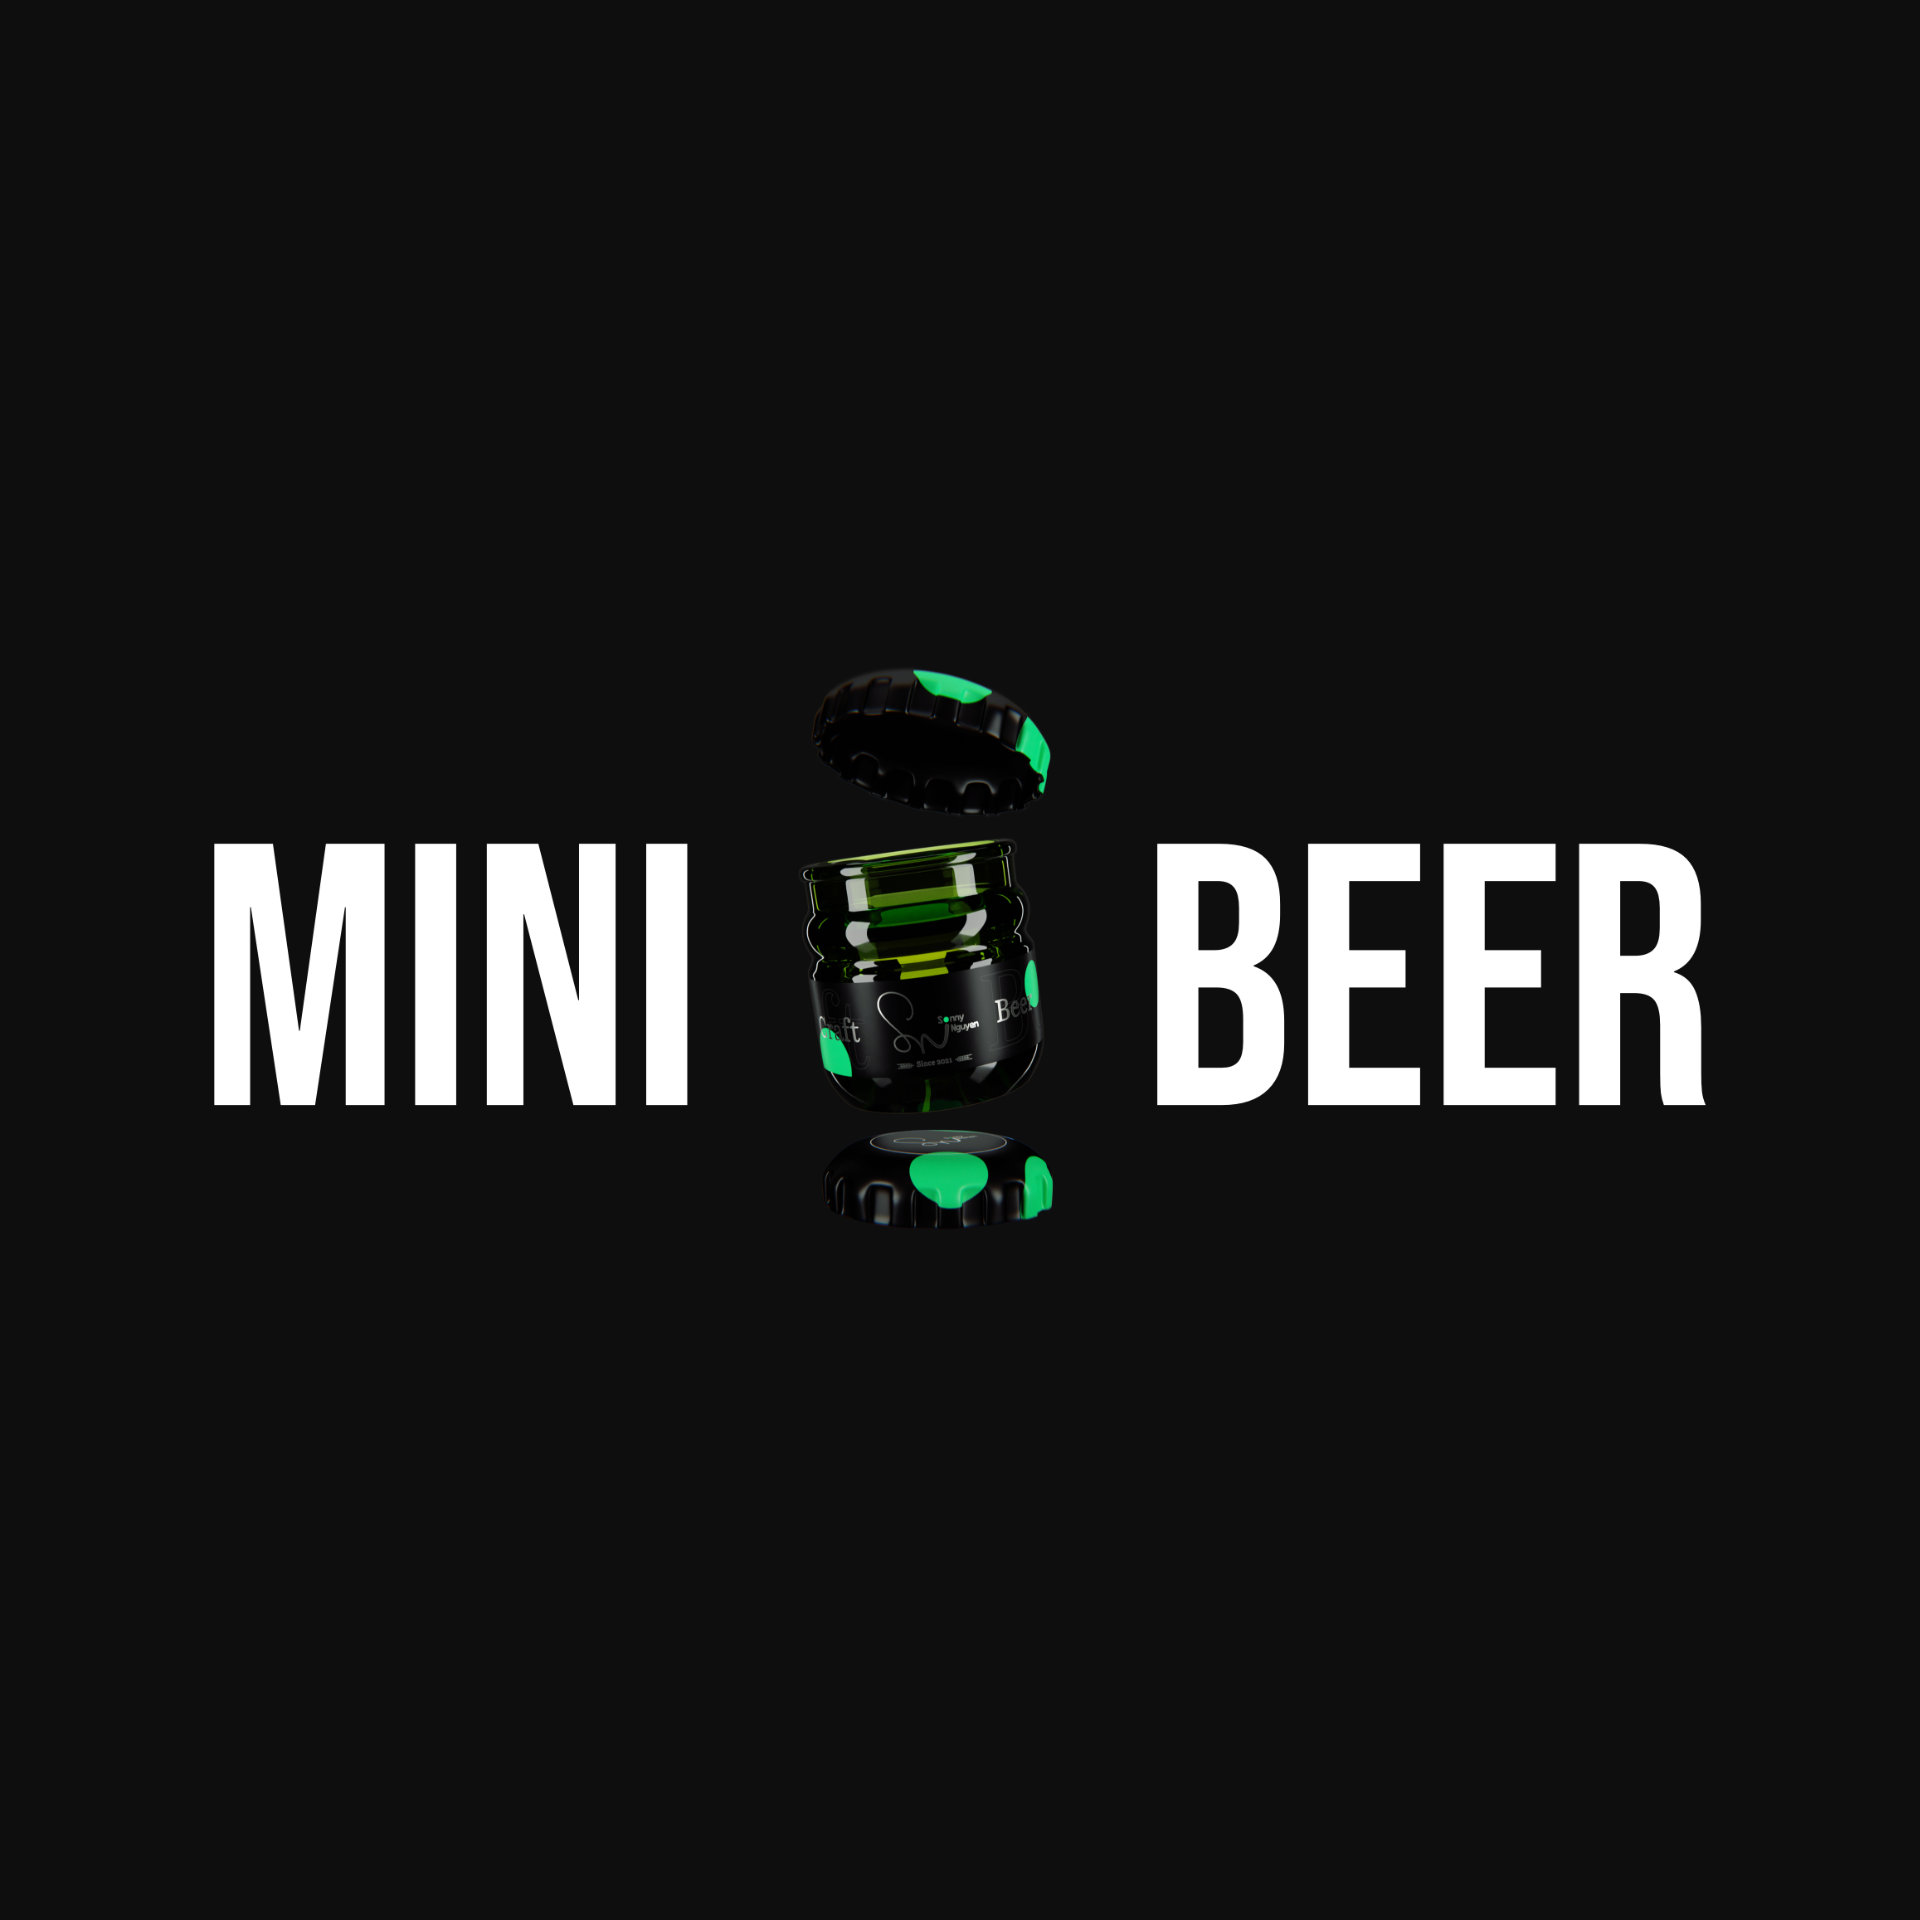 MiniBeer 02A - Super mini beer - Sonny Nguyen